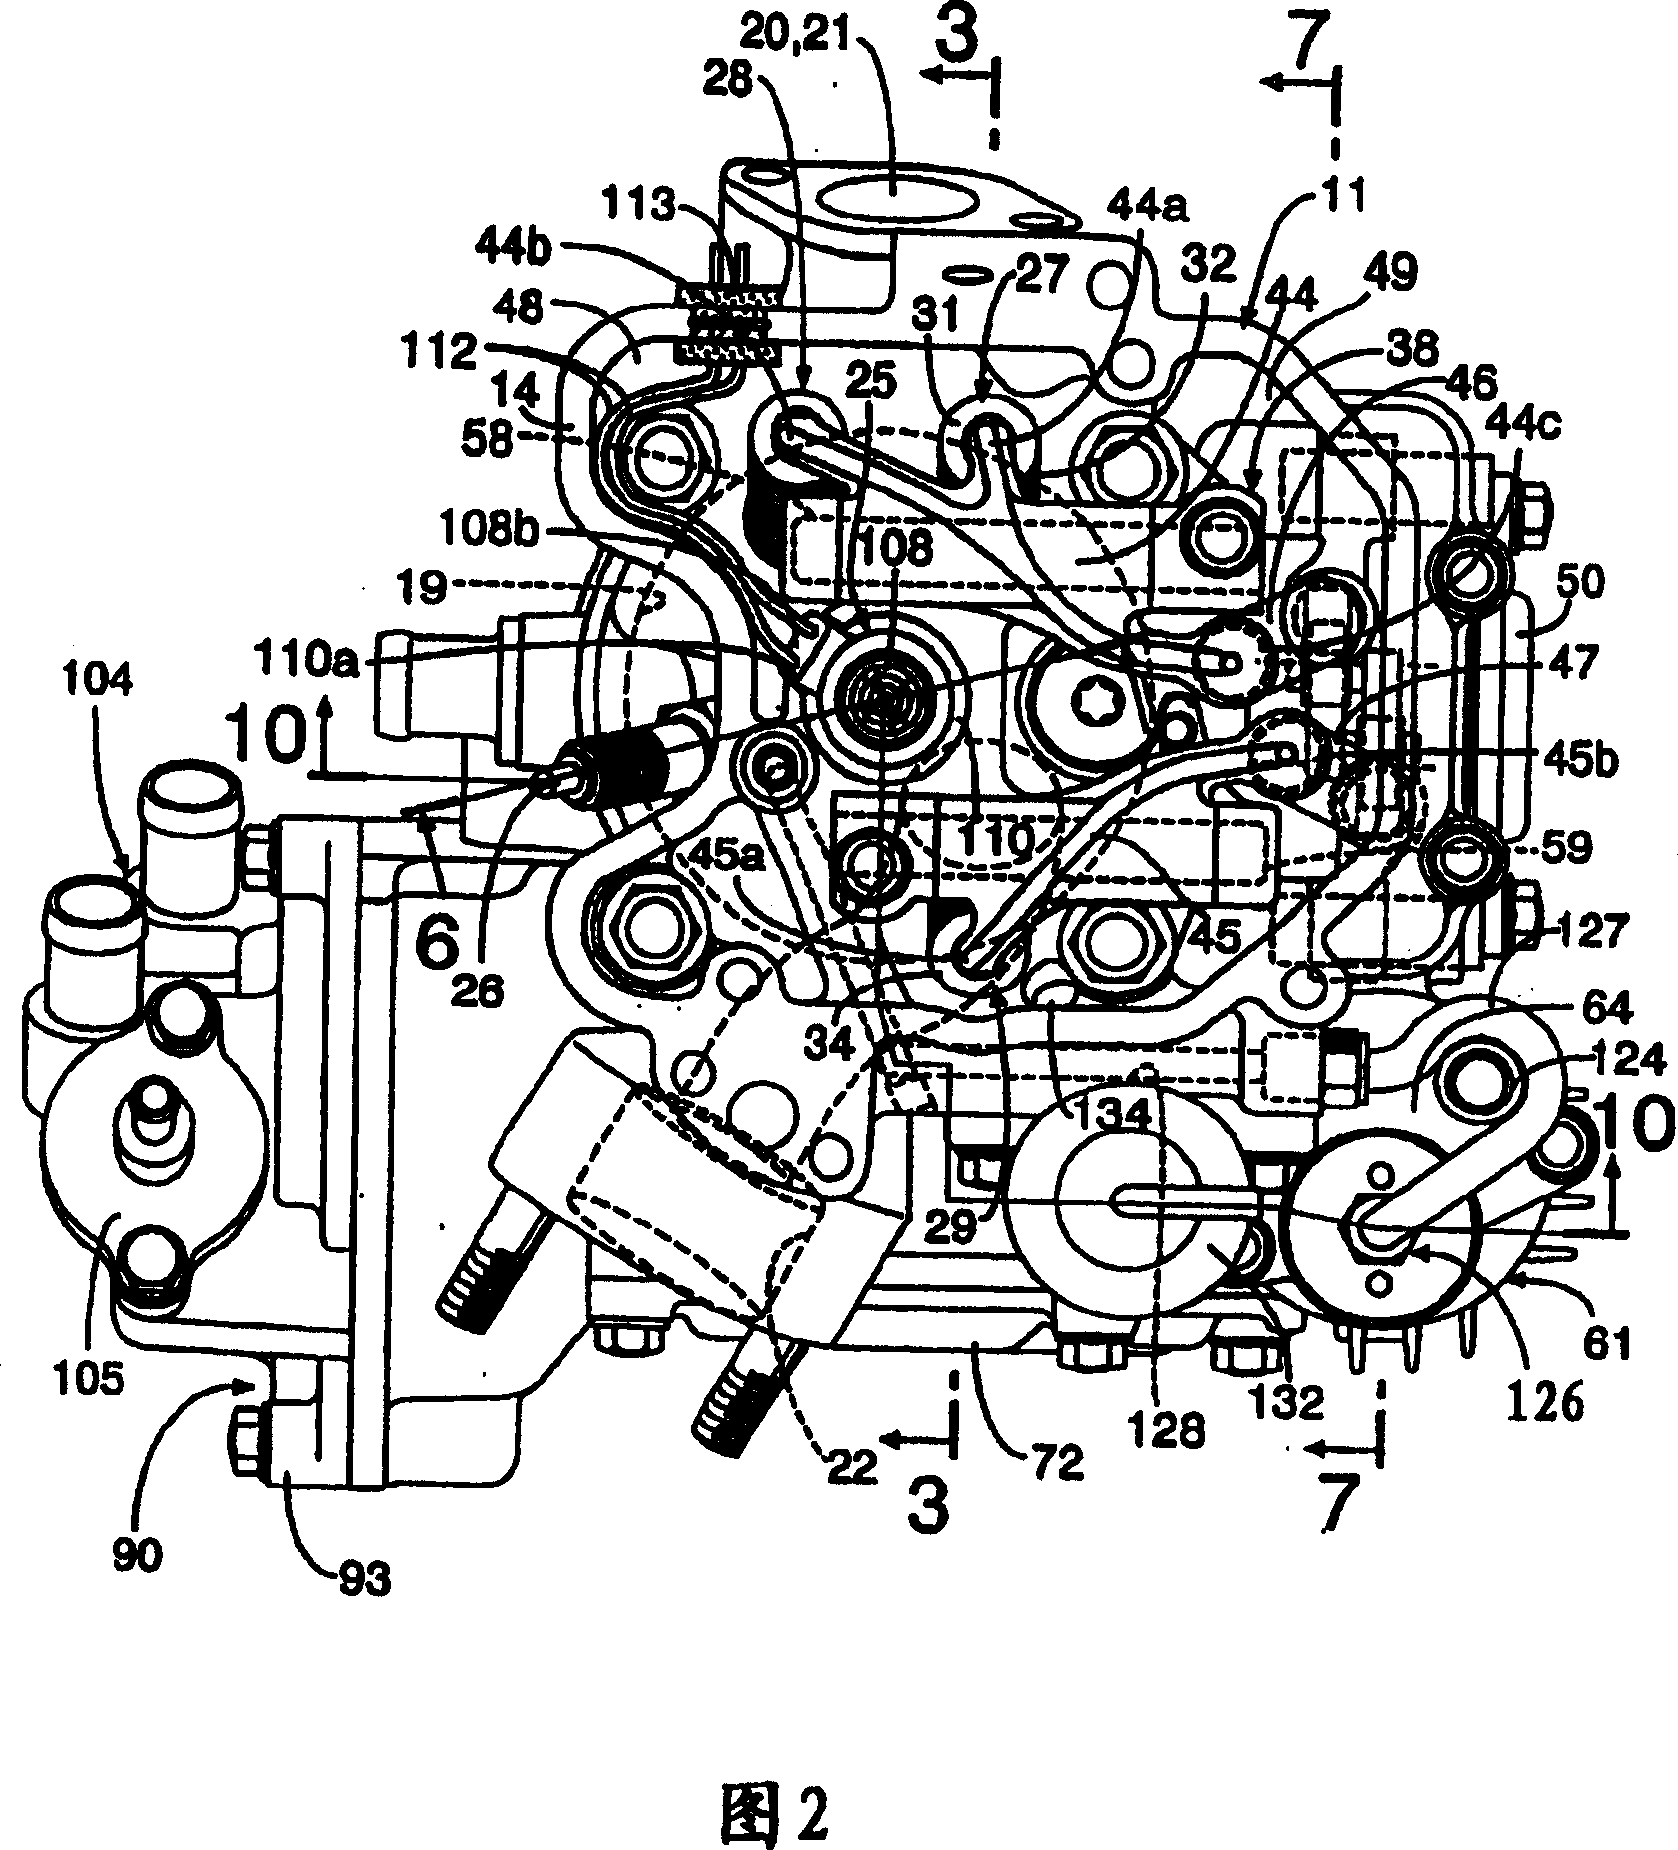 Four-stroke engine